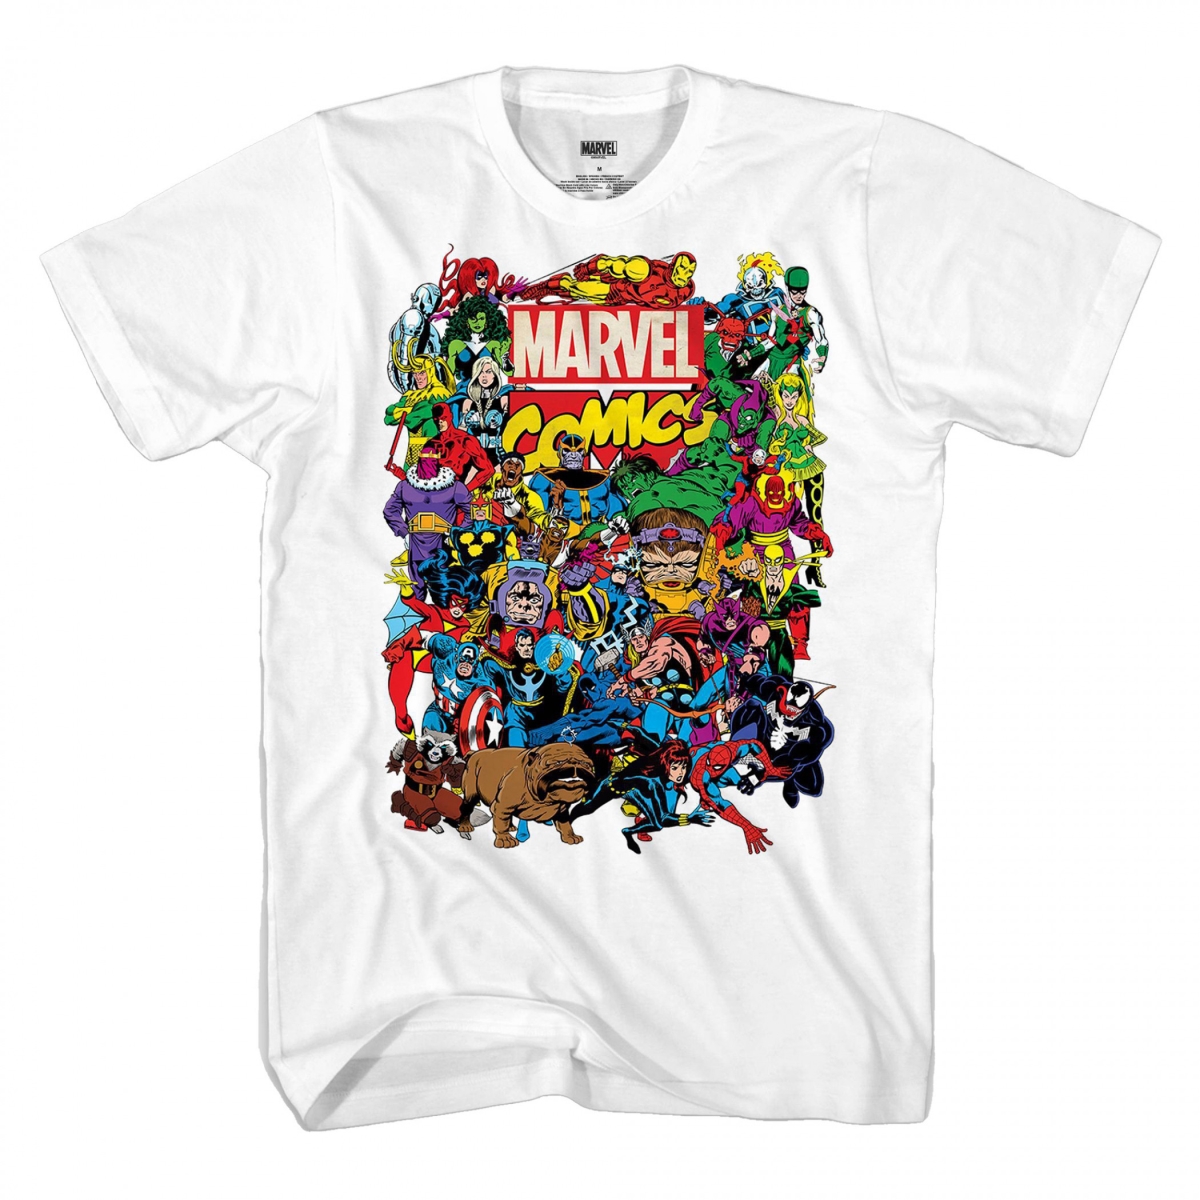 854882-xlarge Marvel Heroes Group Shot Comic Art Mens T-Shirt, White - Extra Large -  Marvel Heroes & Avengers